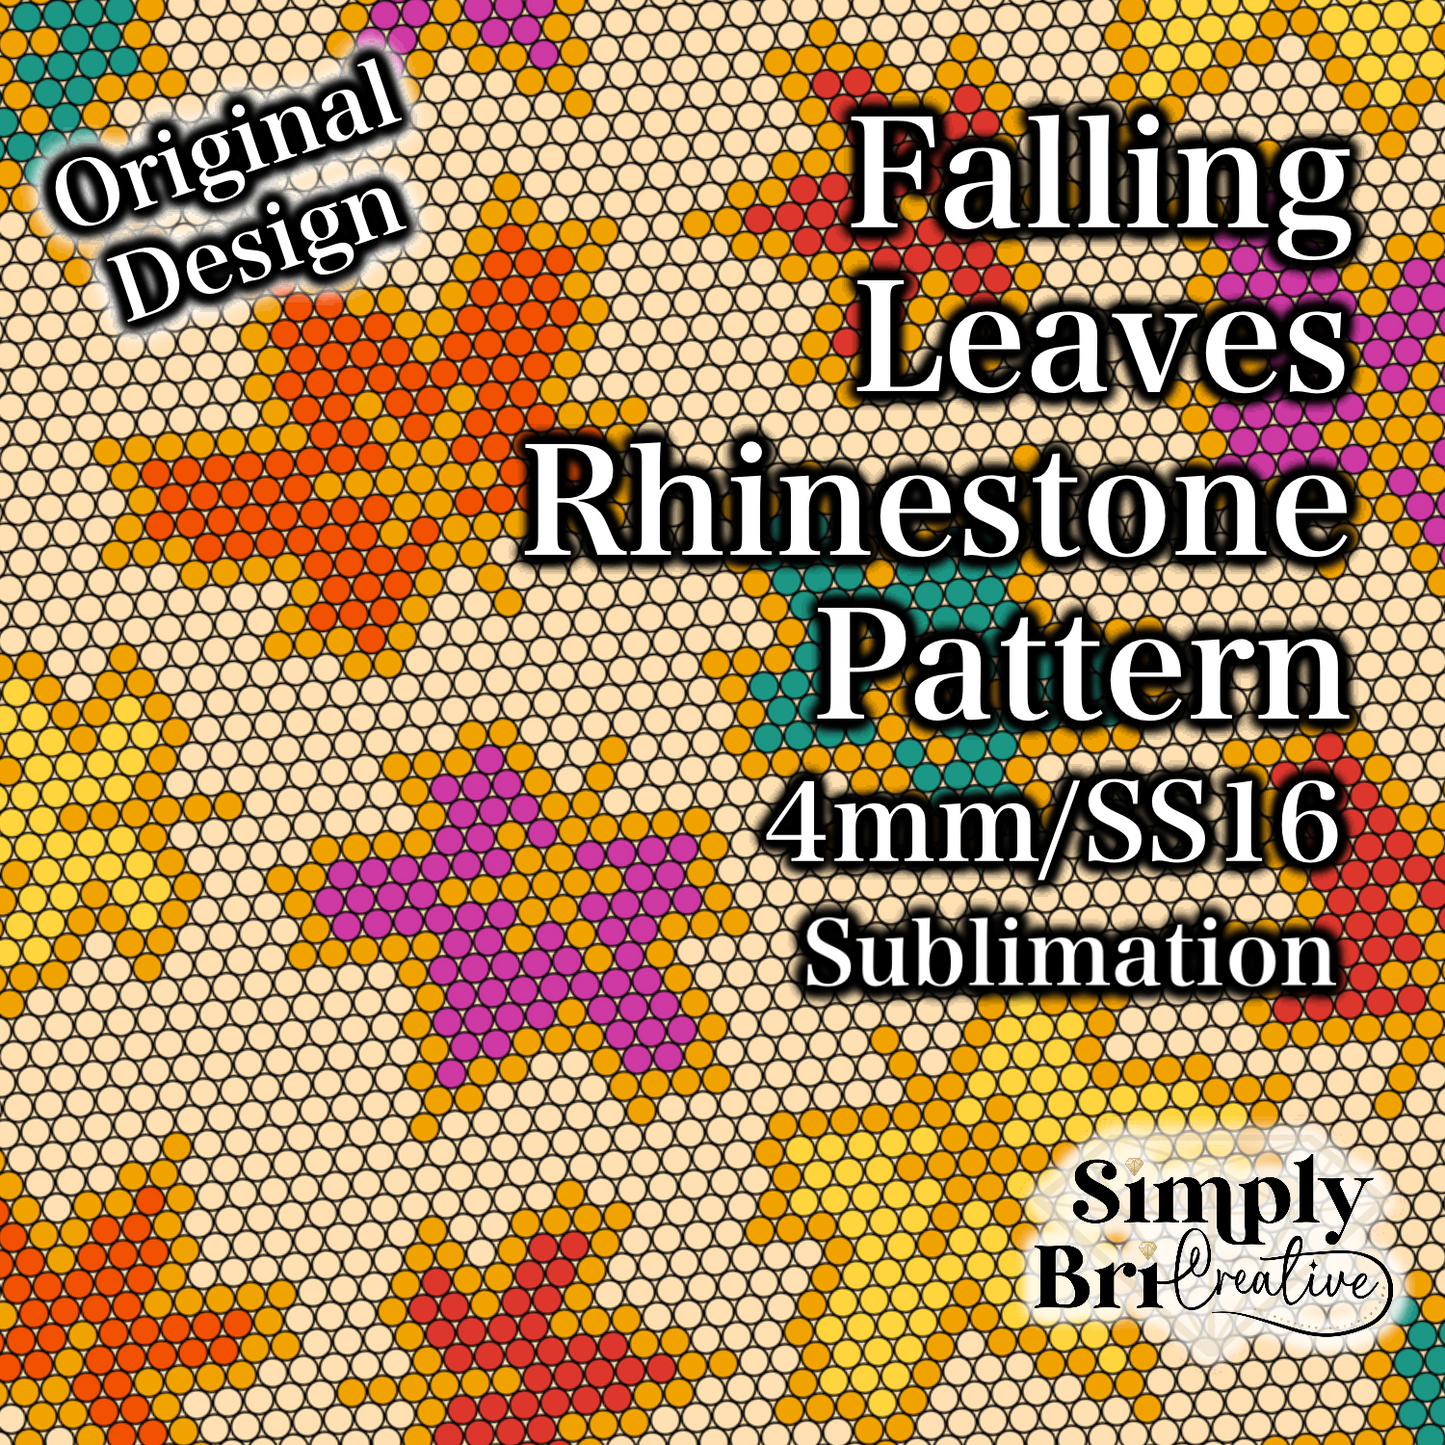 Falling Leaves Sublimation Rhinestone Pattern (4mm/SS16)